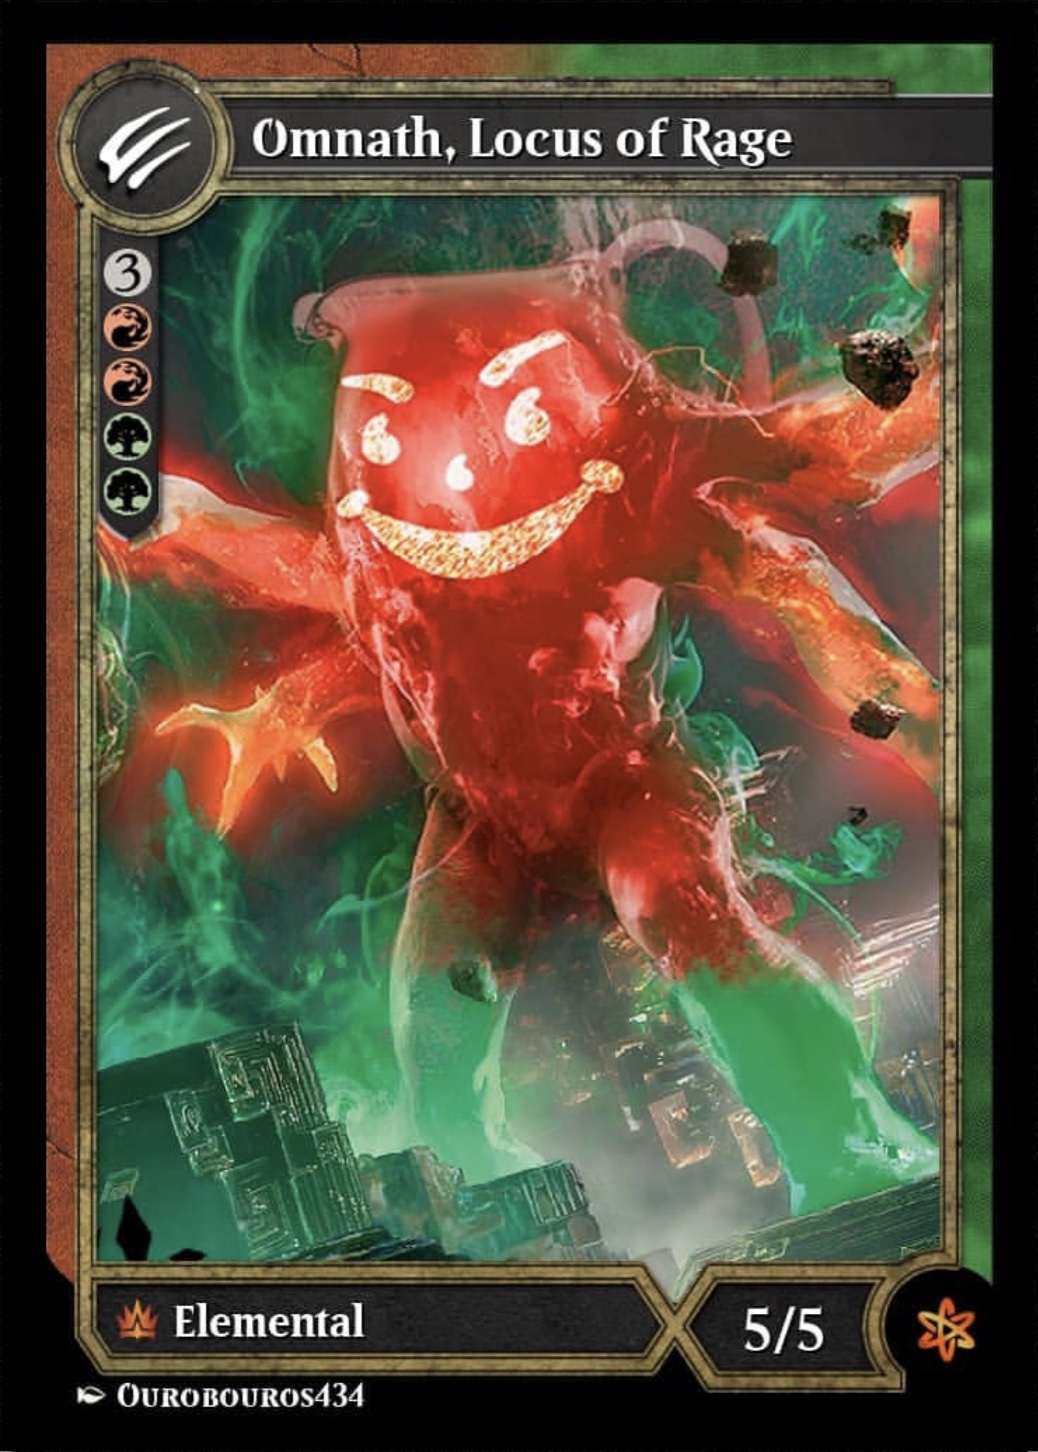 Featured card: Omnath, Locus of Rage